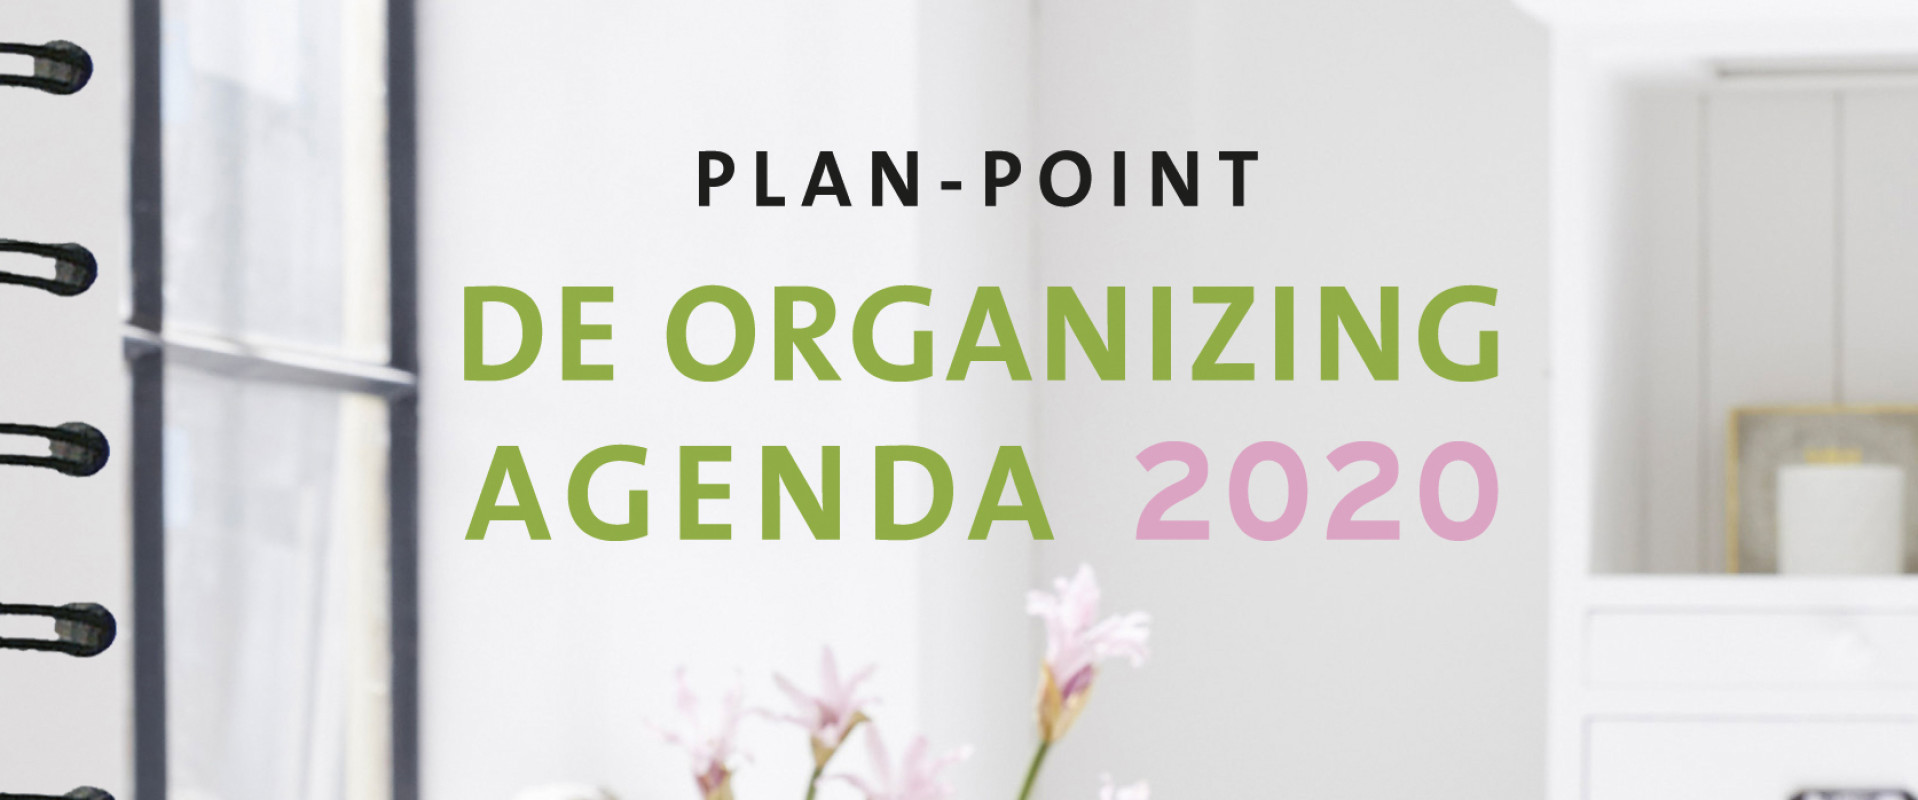 Organizing Agenda 2020 van Plan-Point